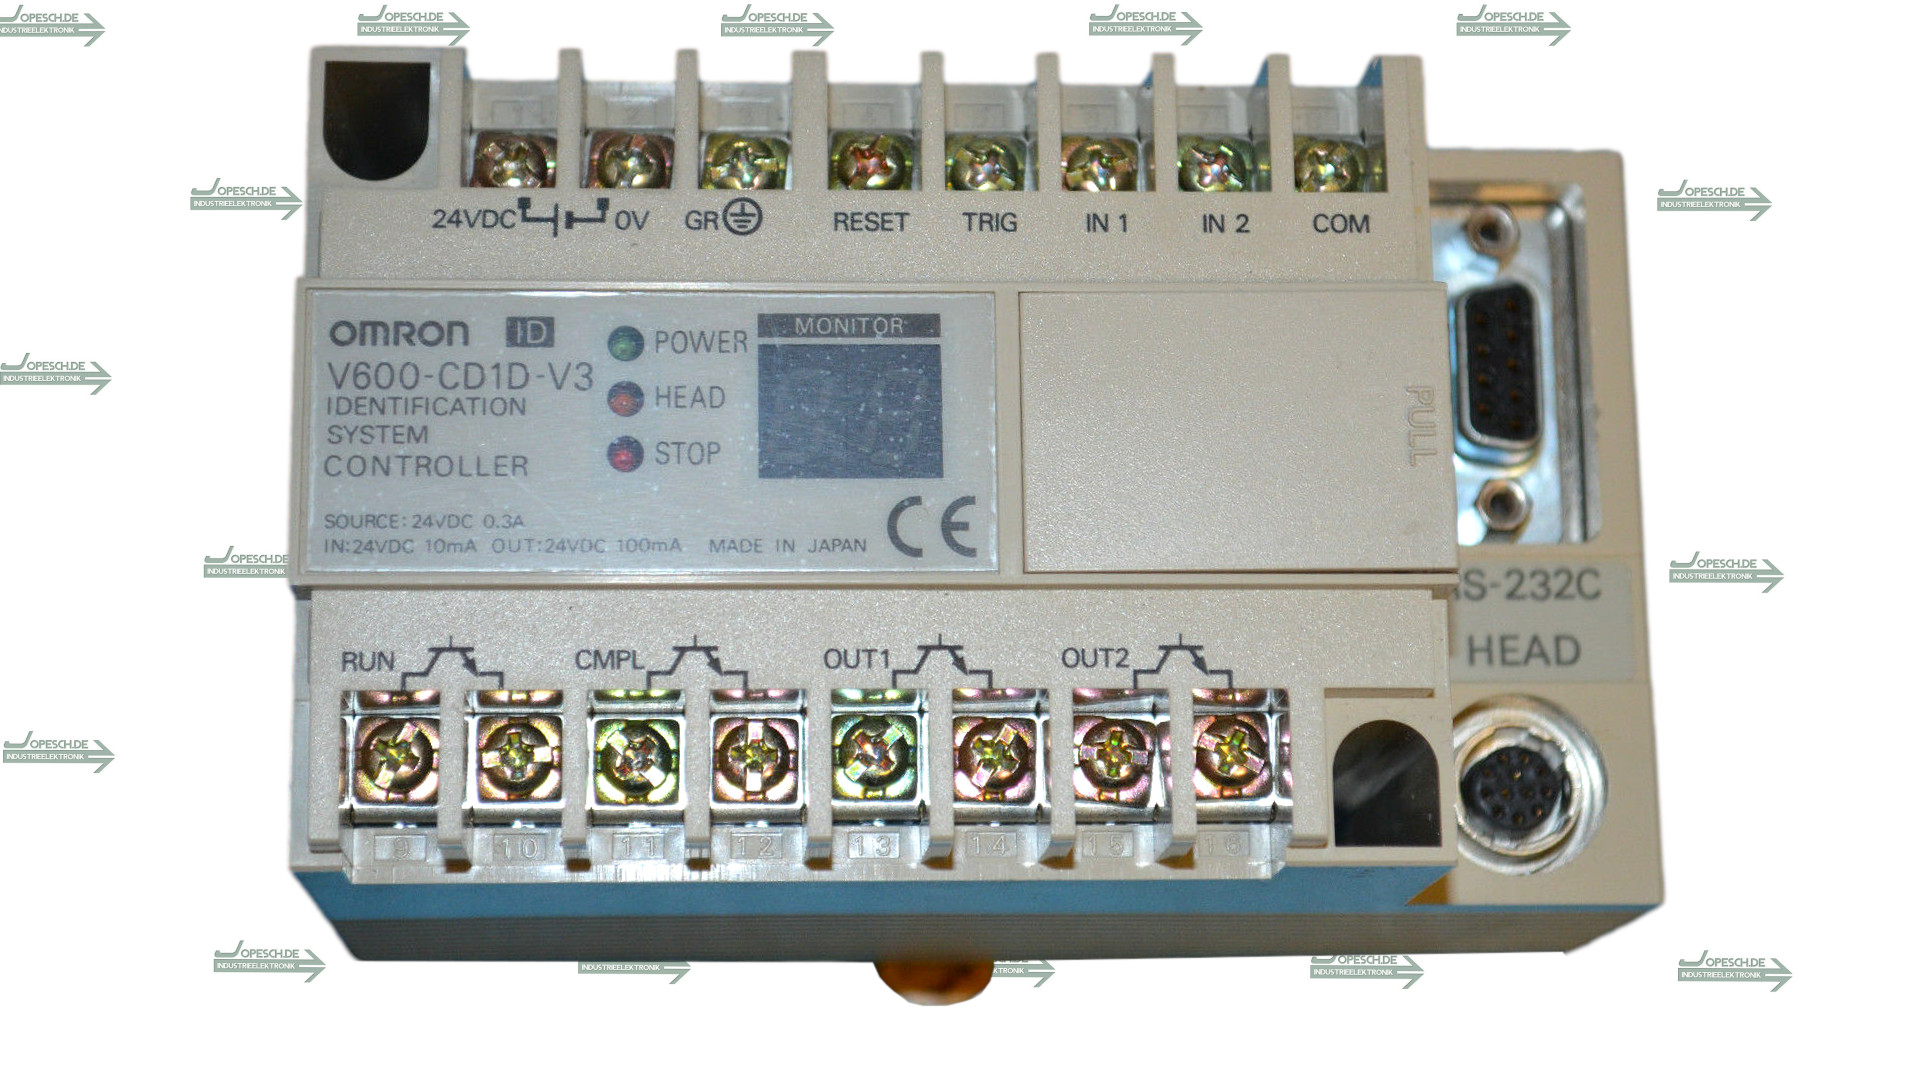 OMRON V600 Identification System Controller V600-CD1D-V3